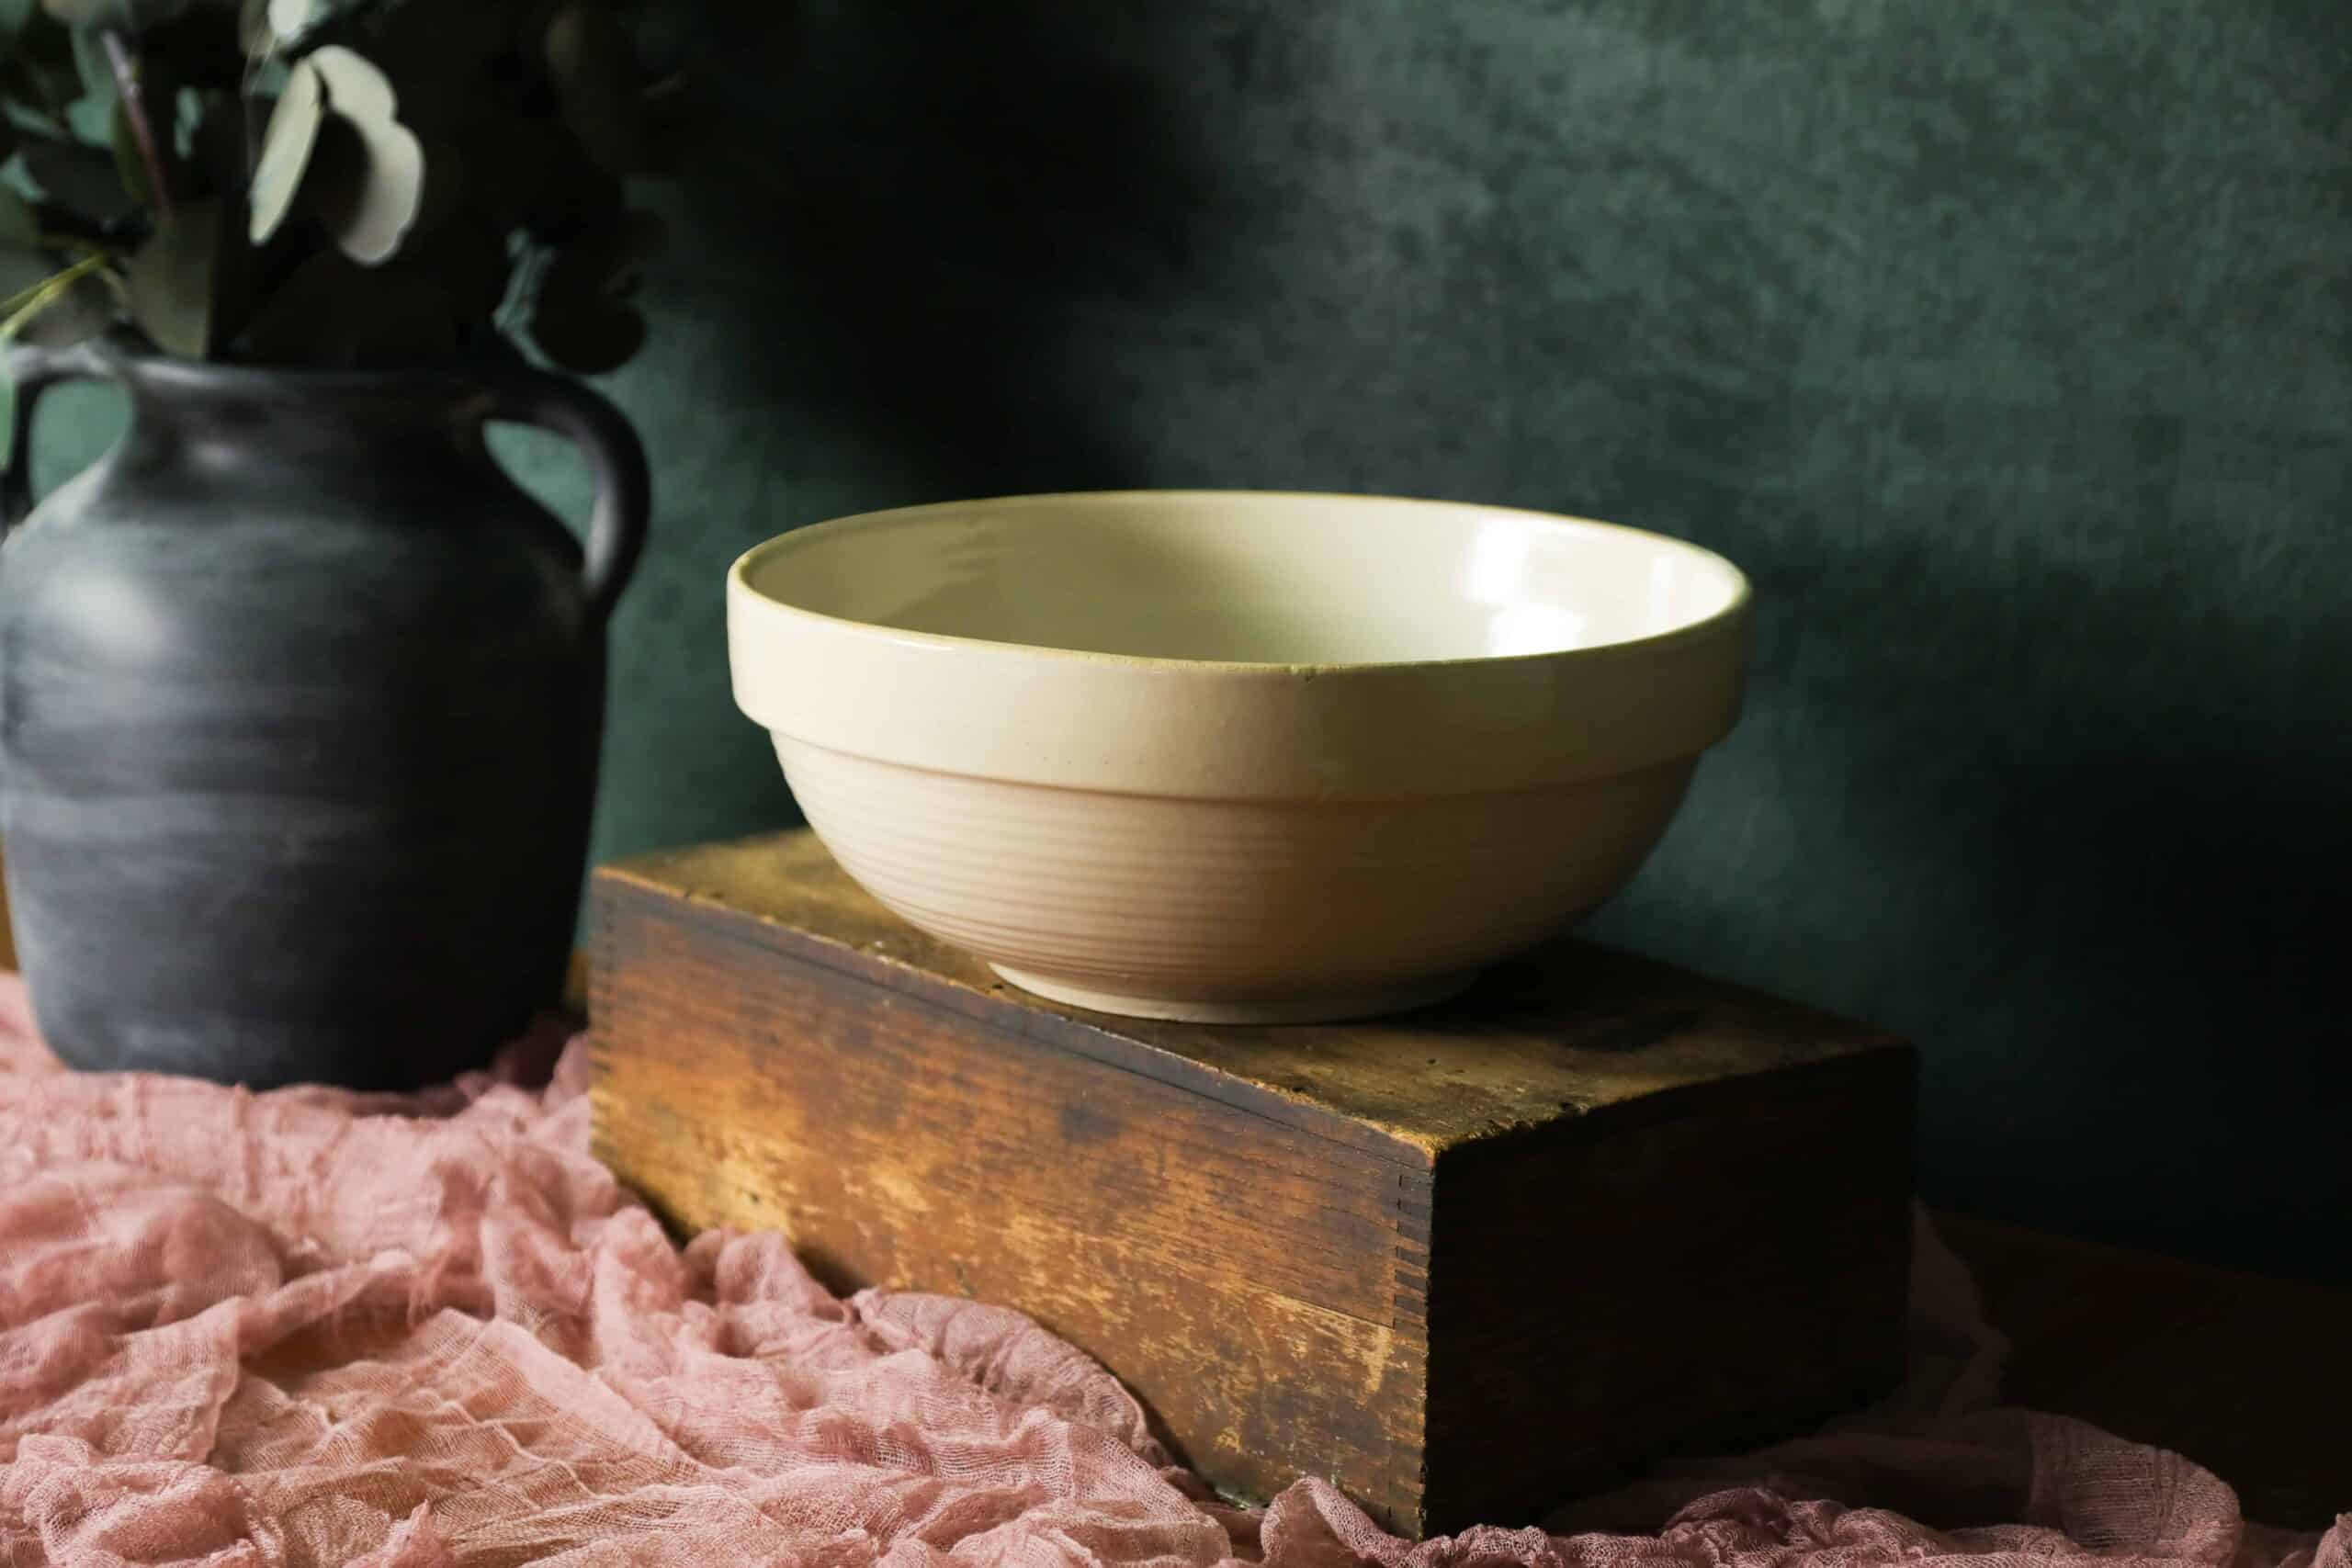 farmhouse ceramic bowl on wooden box against green backdrop